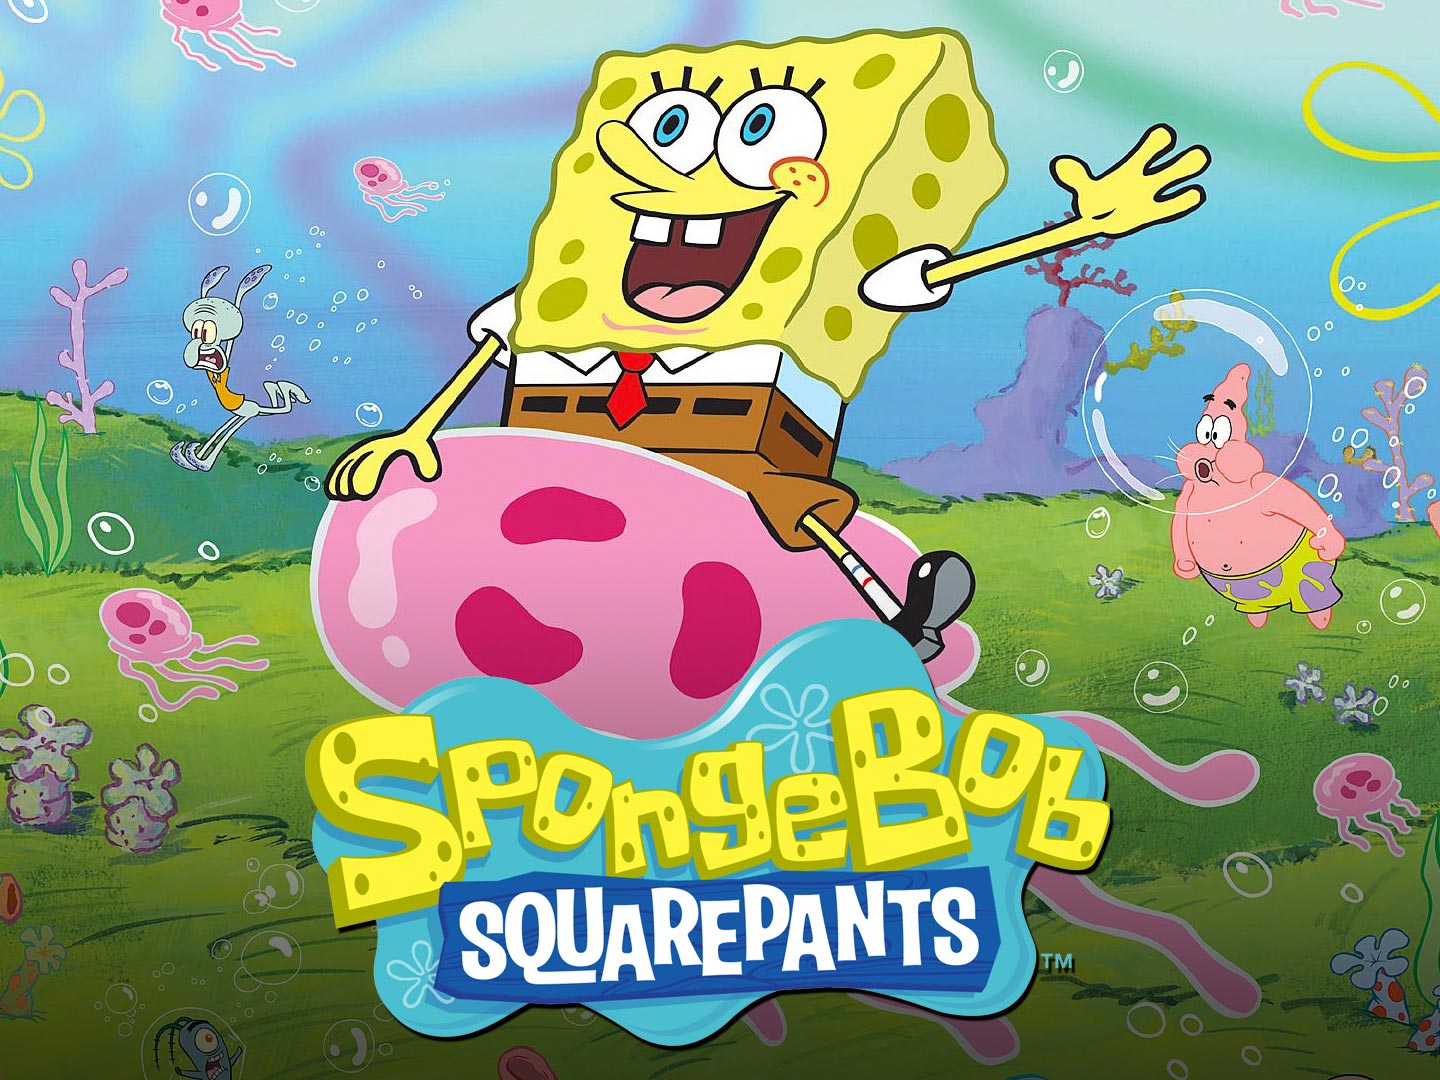 The Spongebob Squarepants Movie – IFC Center